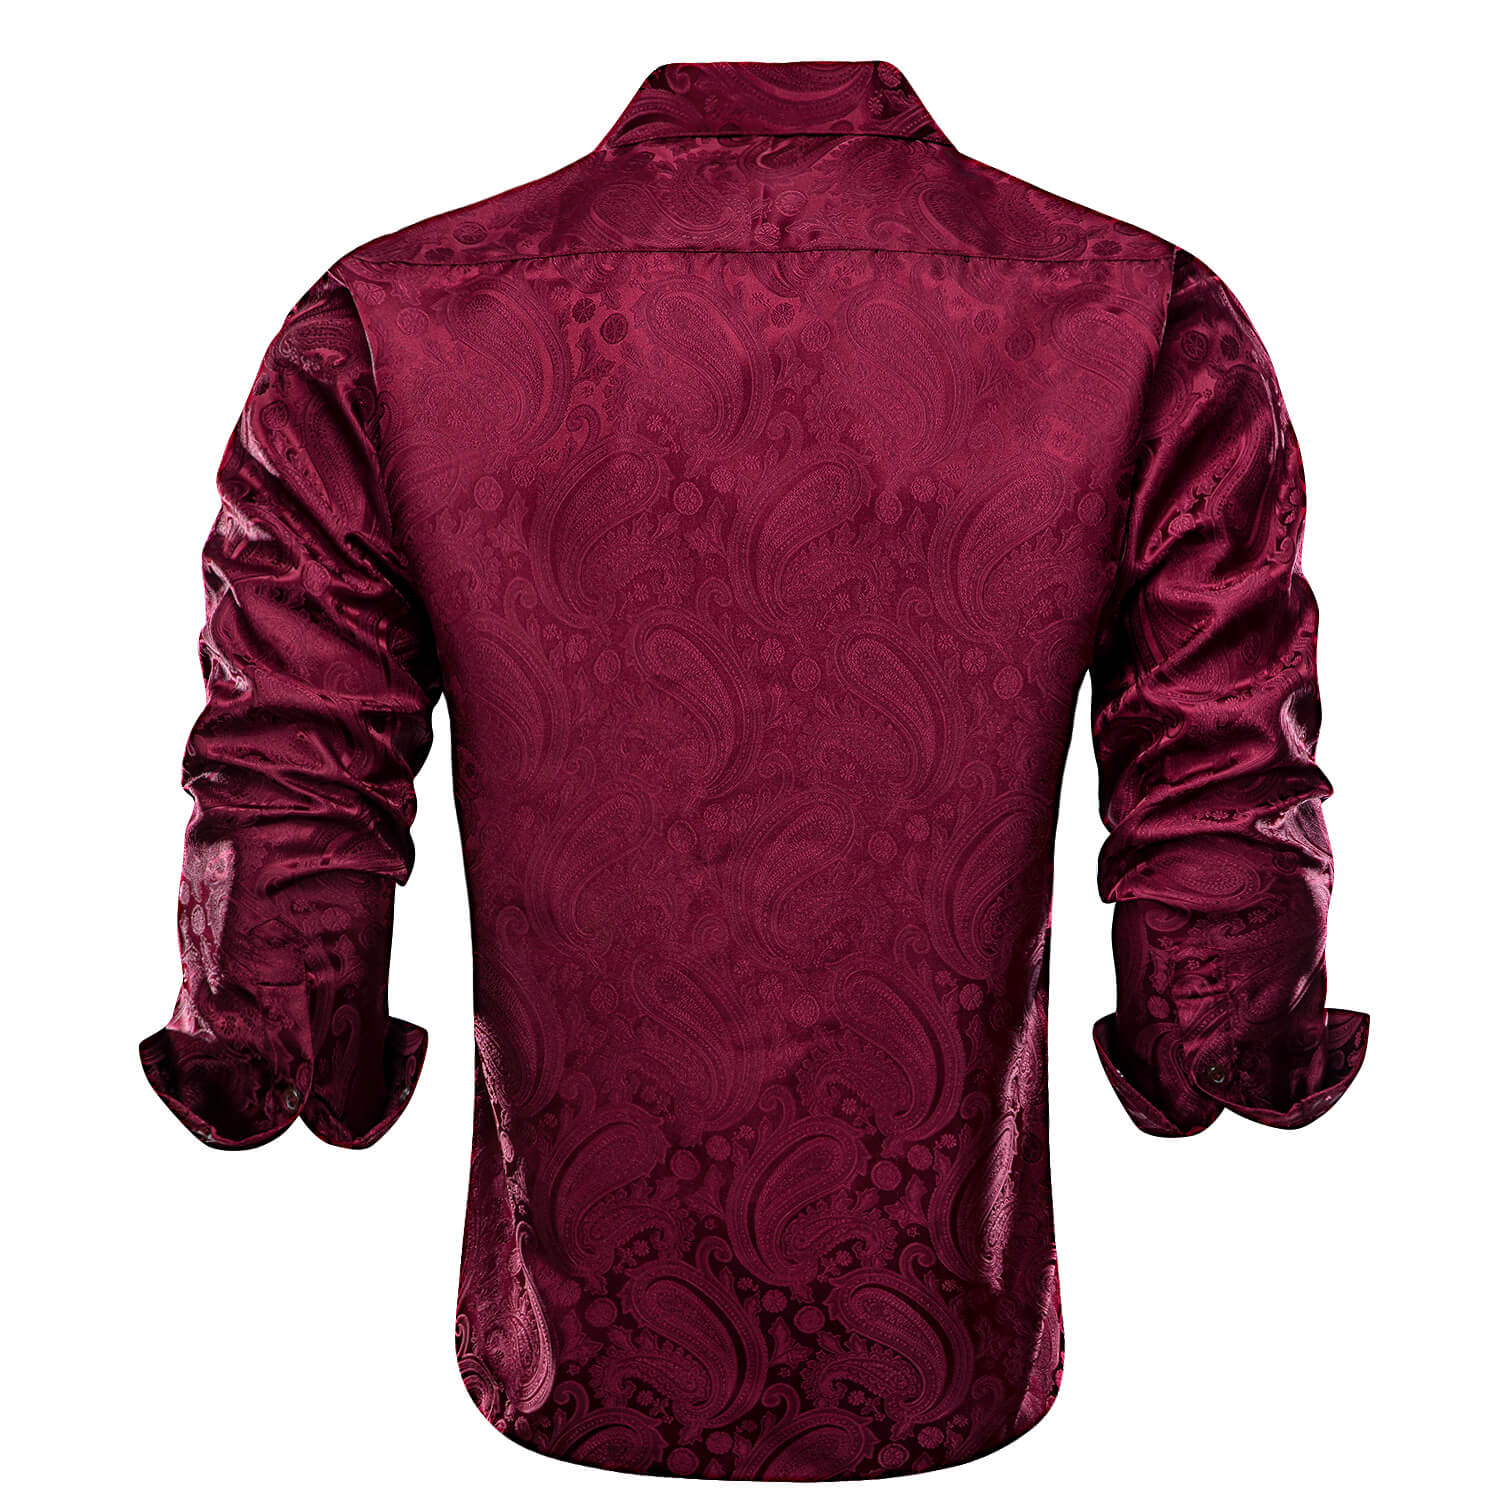 Hi-Tie Button Down Shirt Burgundy Red Woven Paisley Silk Men's Shirt